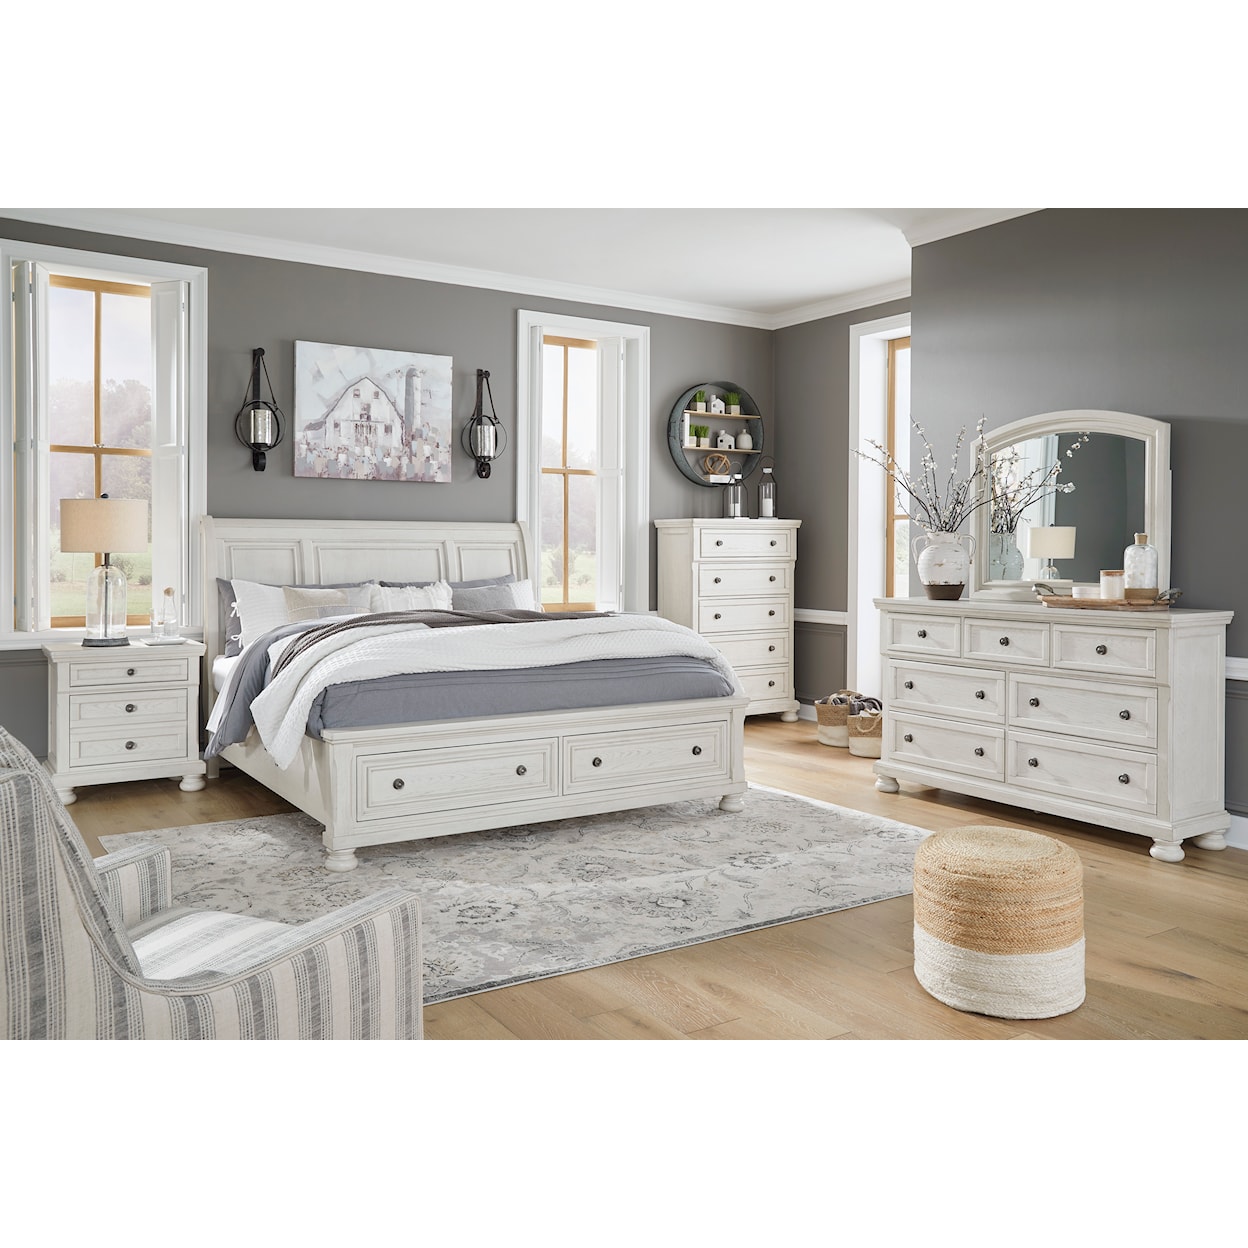 Ashley Furniture Signature Design Robbinsdale Queen Sleigh Bed with Storage